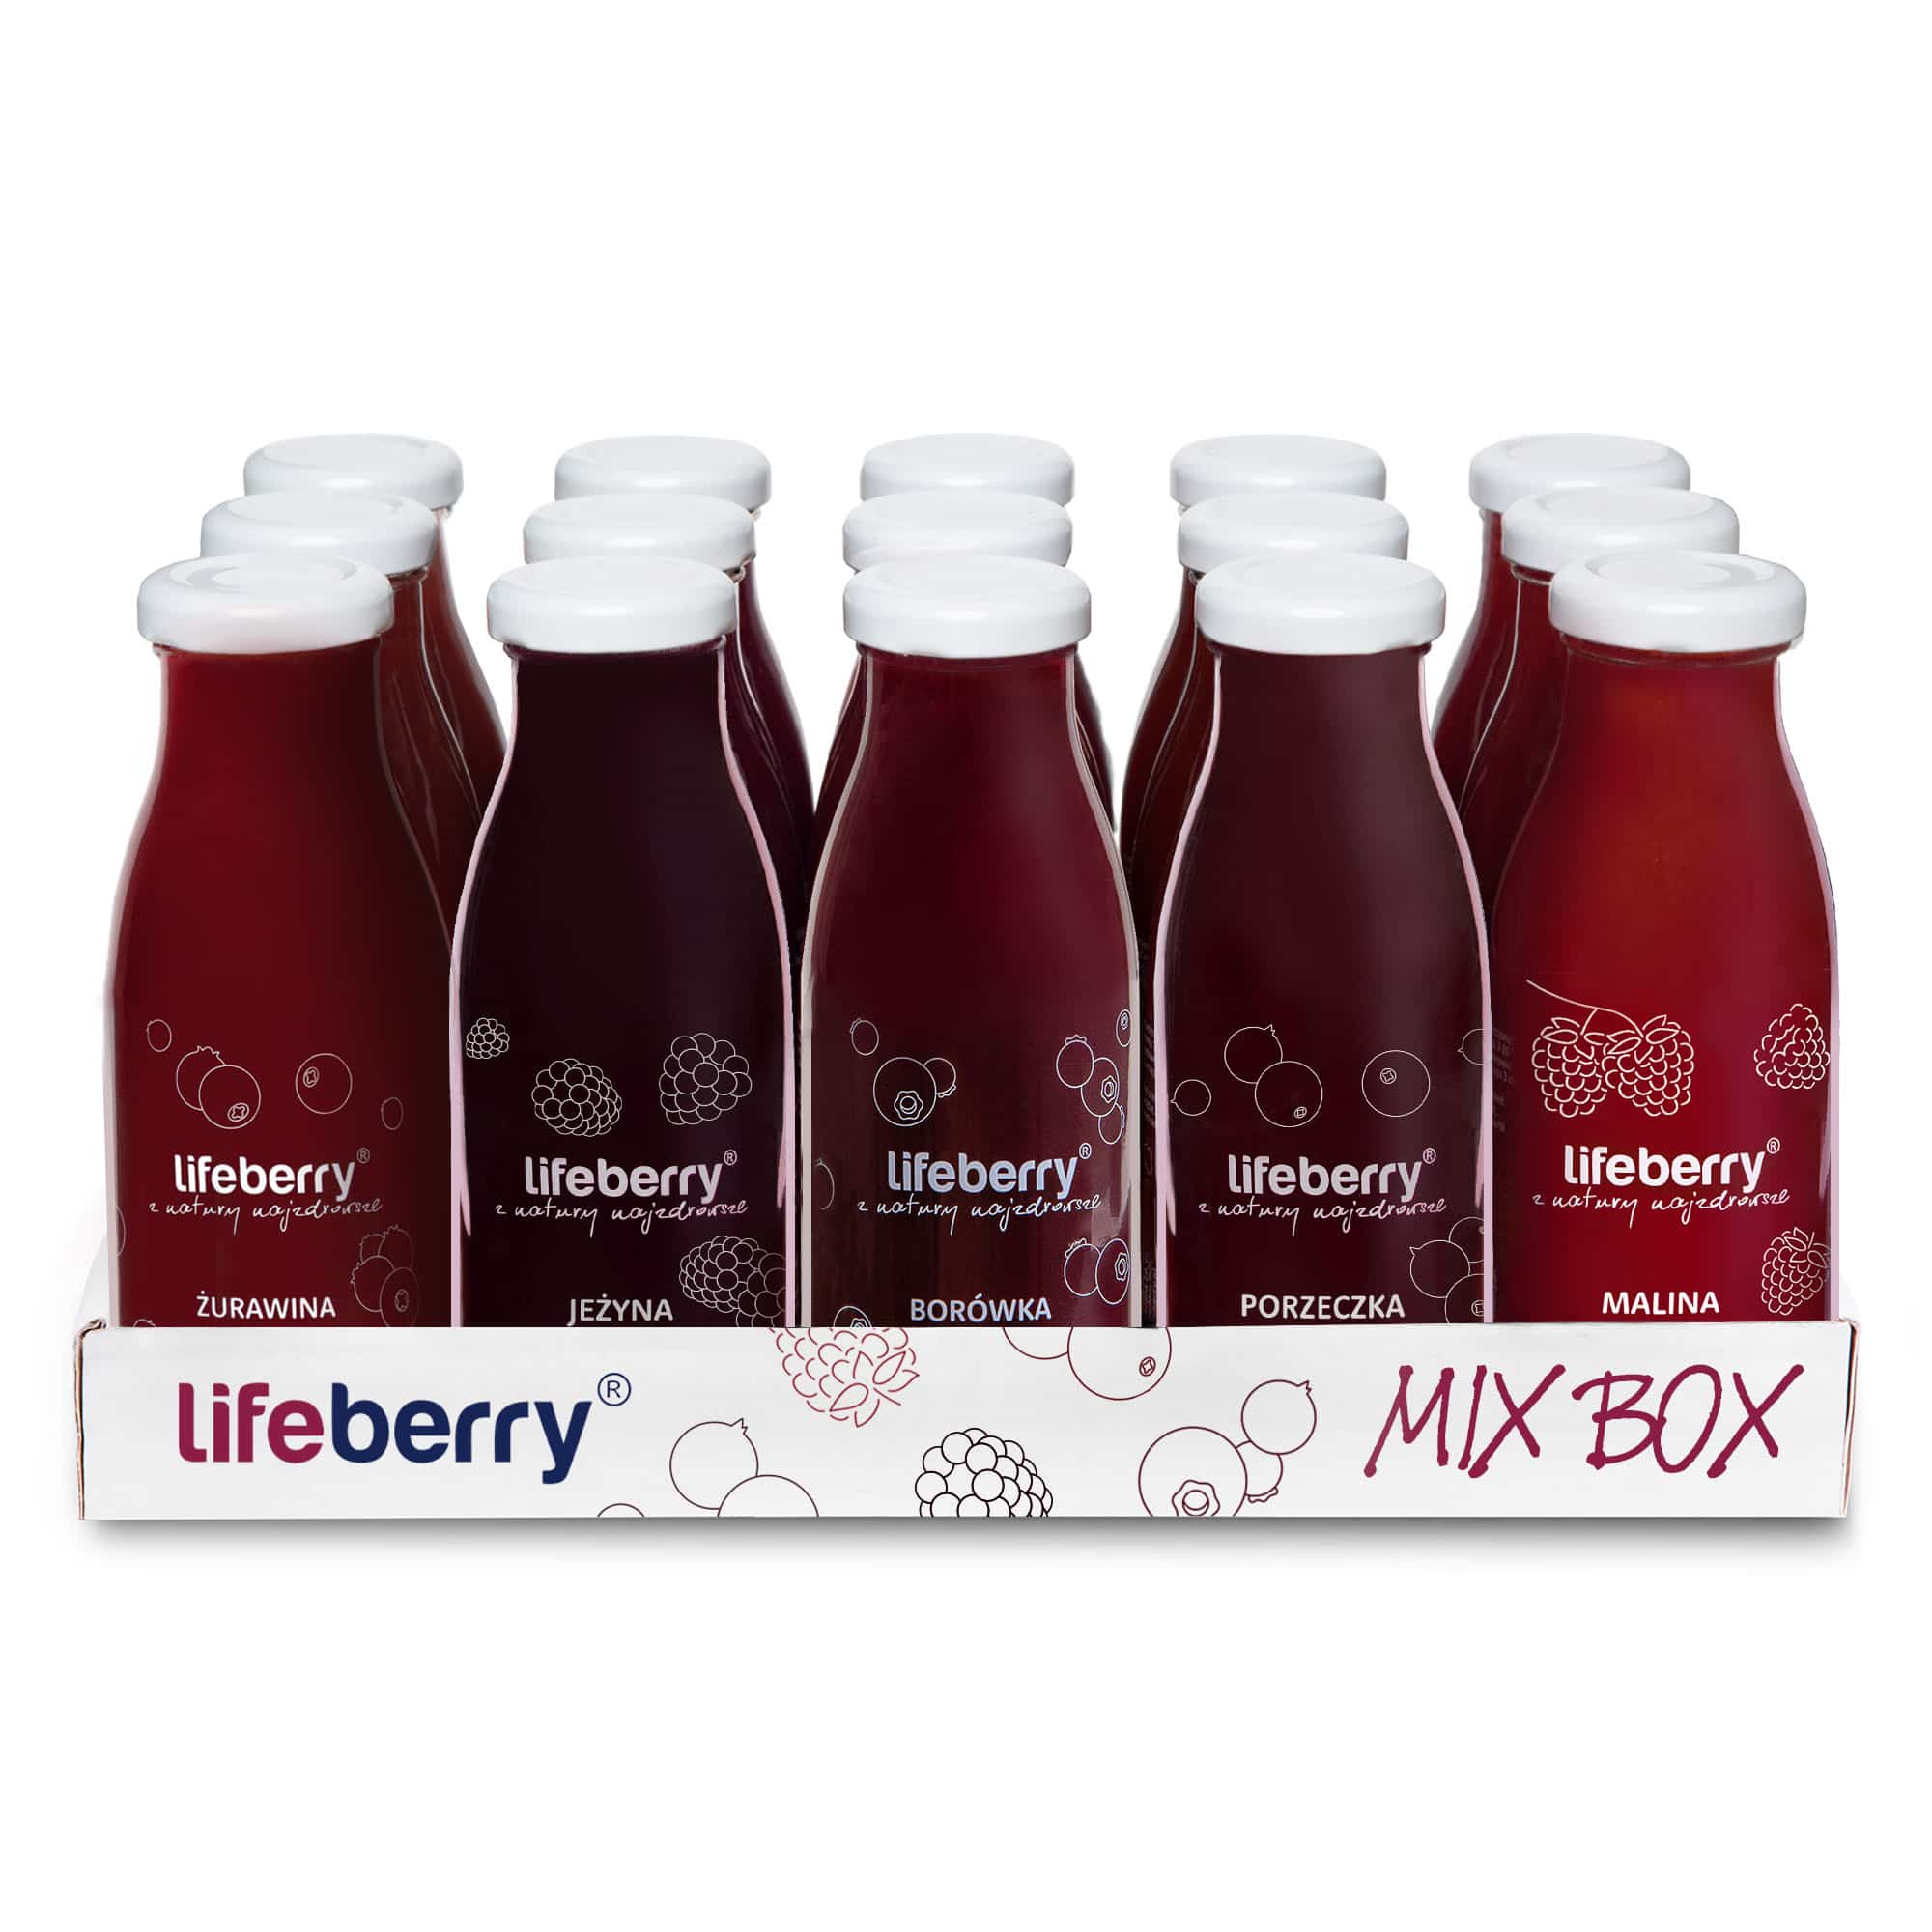 lifeberry mix box smaków